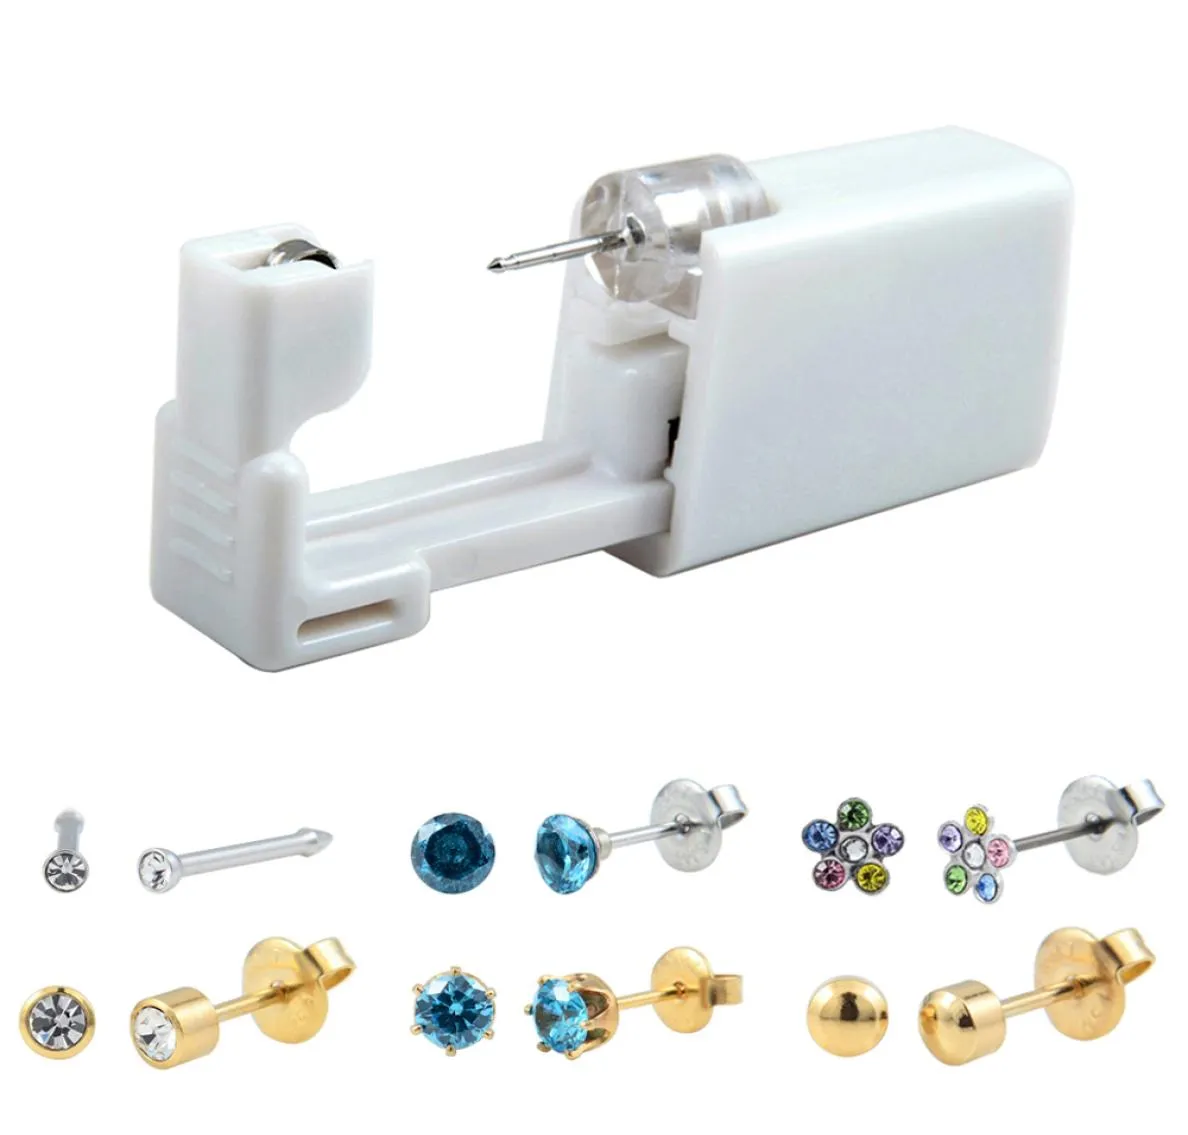 Disposable Safe No Pain Sterile Ear Stud Earring Stude Piercing Gun Piercer Tool Kit Machine Kit Earring Units Piercing Jewelry6840818